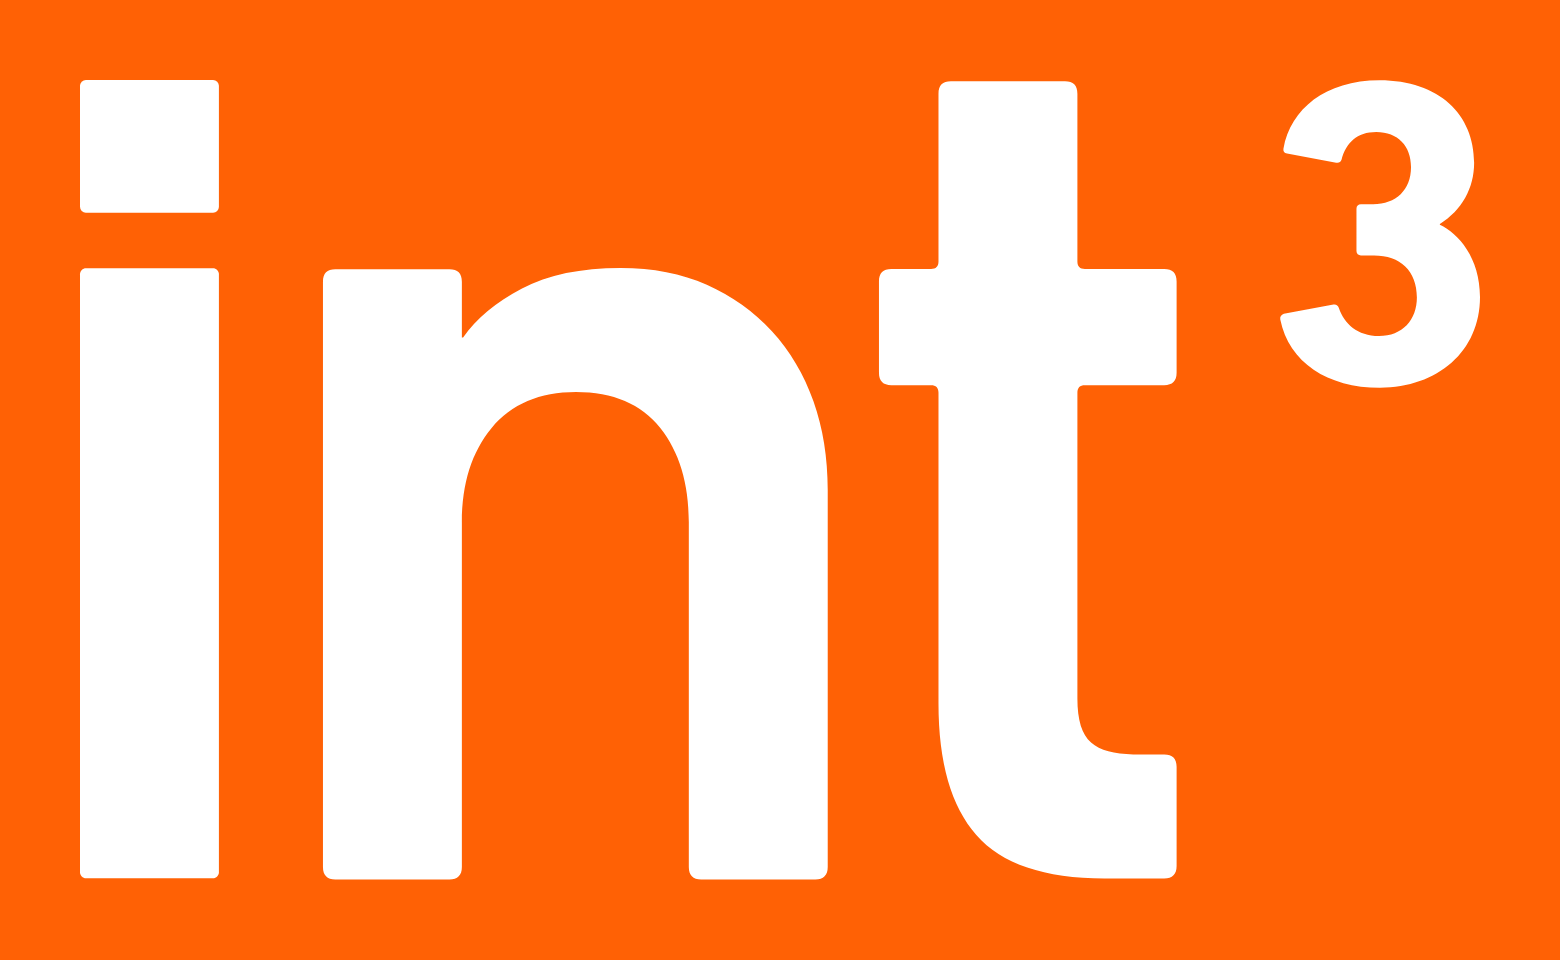 Int3 logo inv signal orange